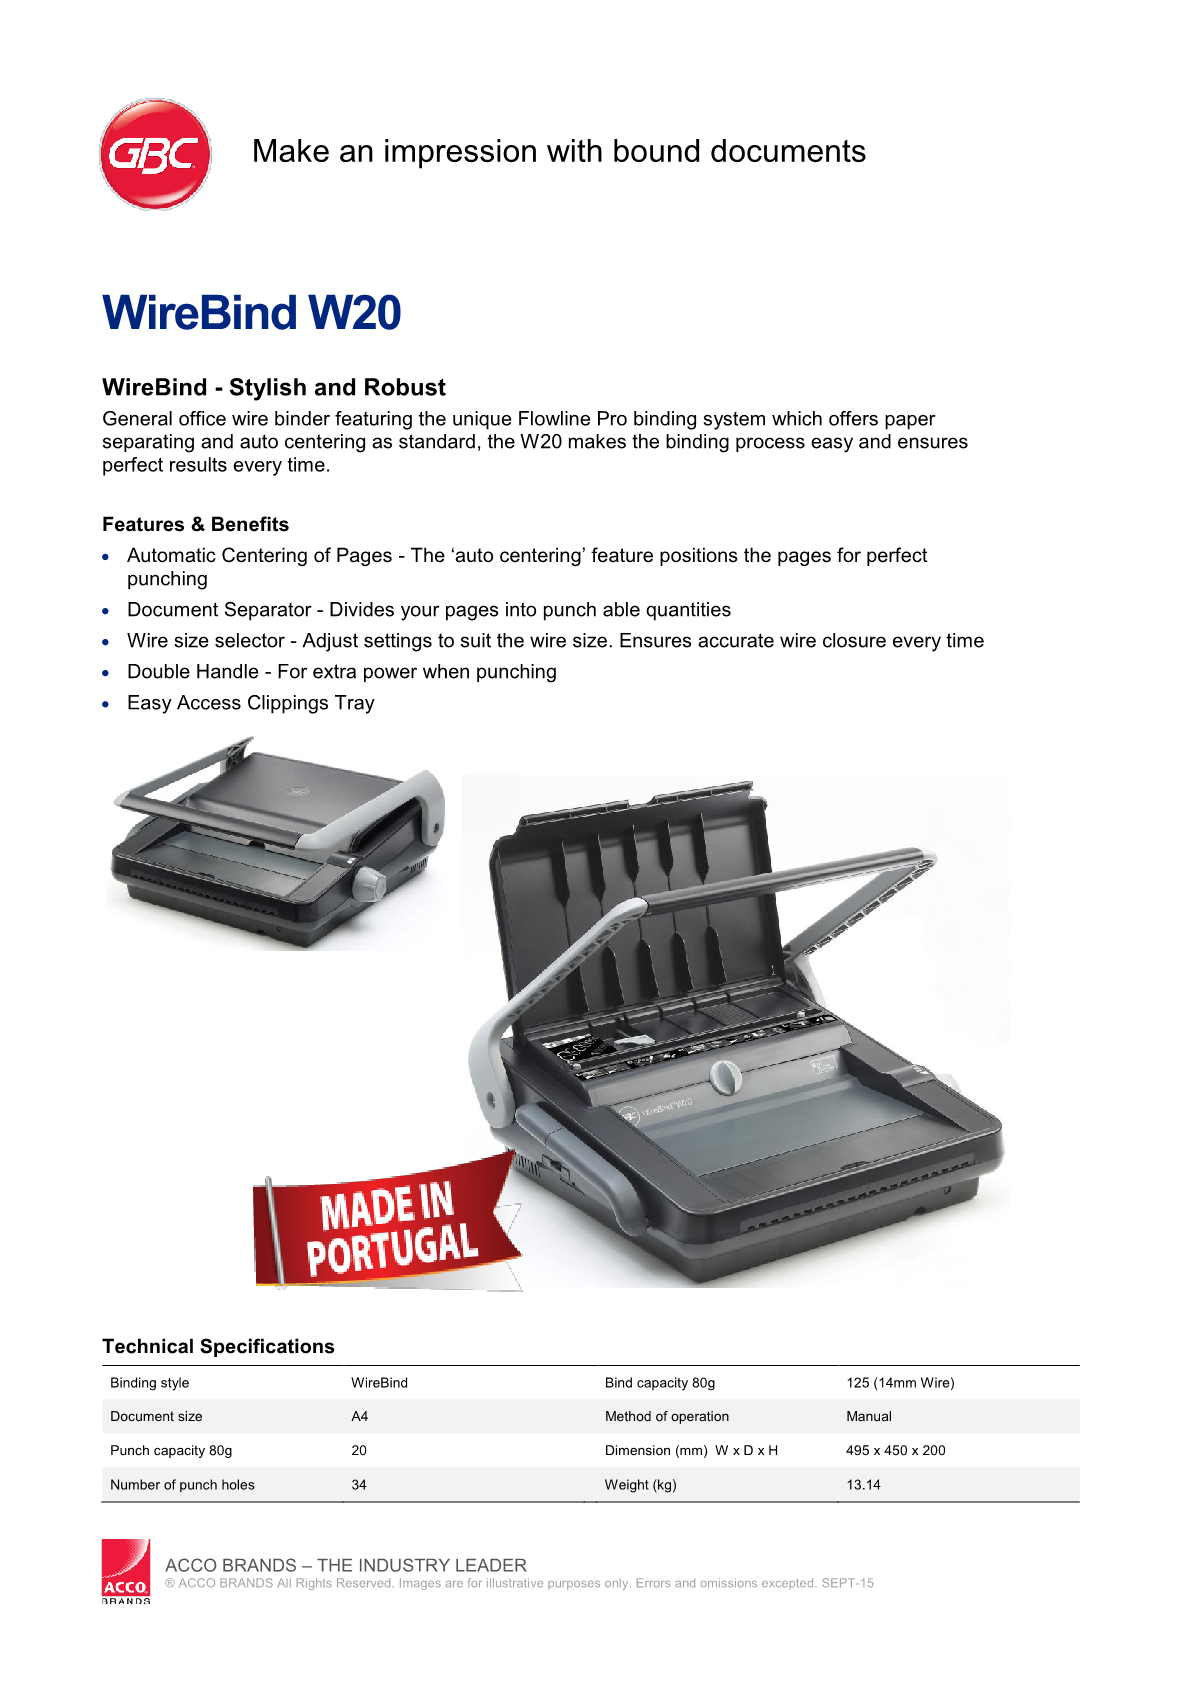 datasheet-wirebind-w201.png